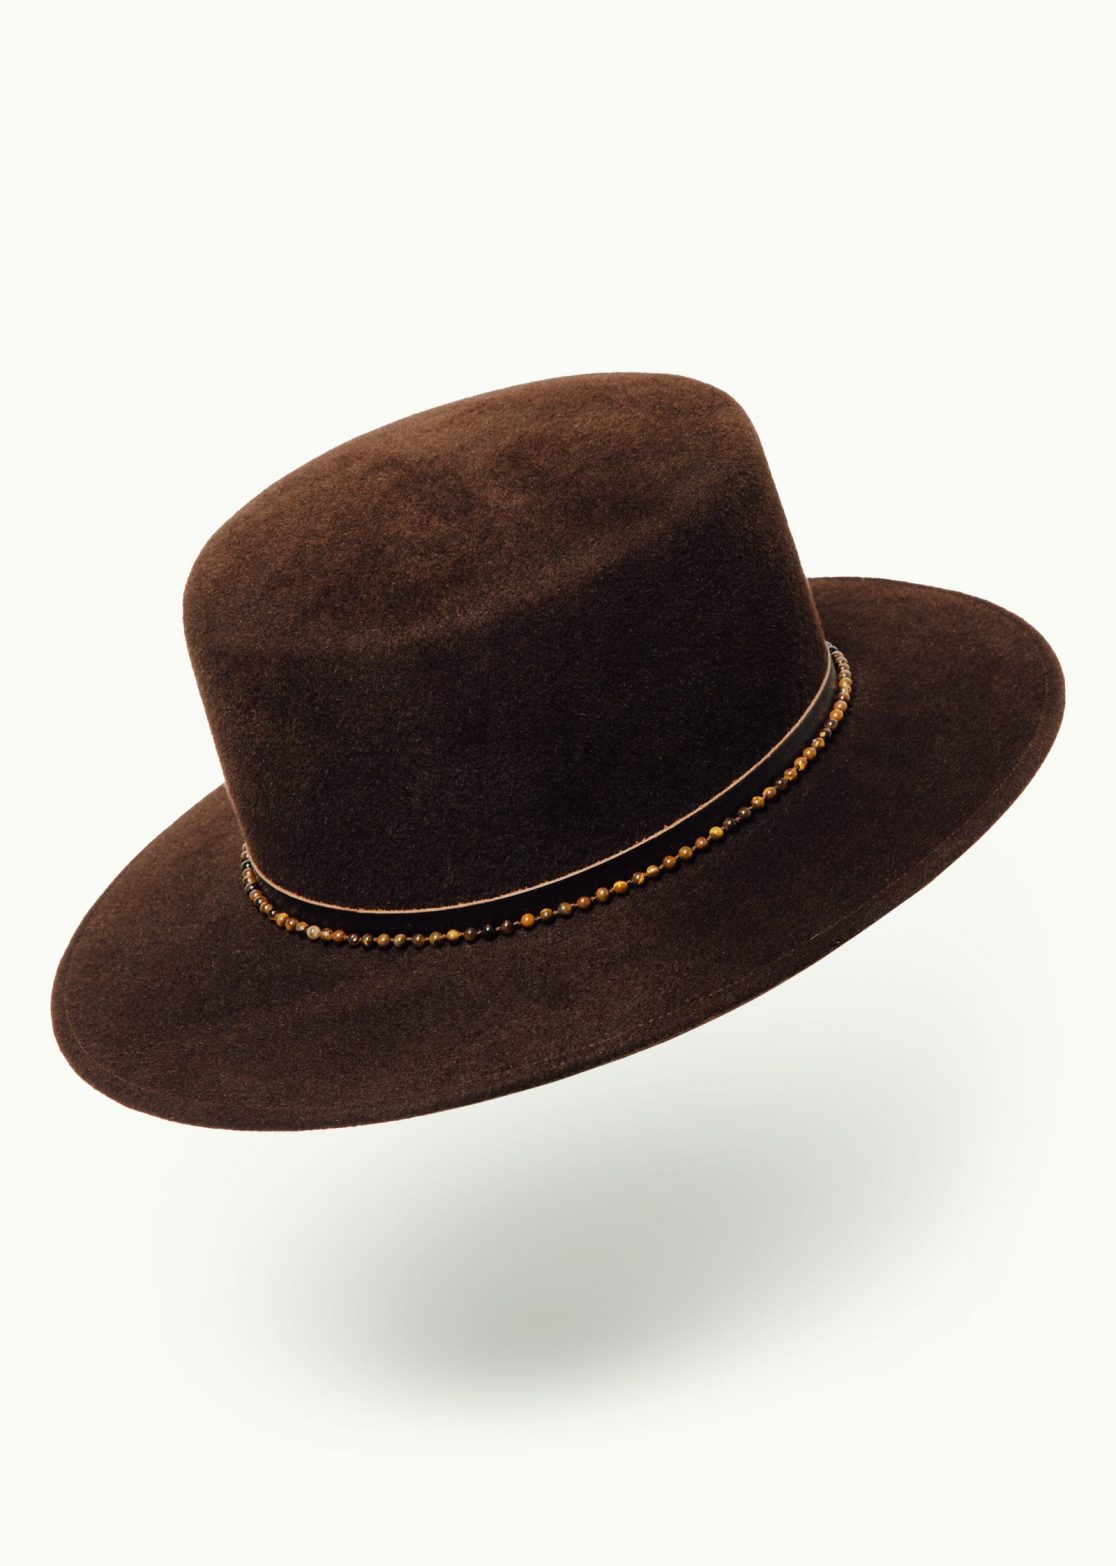 Hats - Women - Unisex - Men - Spaniard Dark Chocolate Image Primary